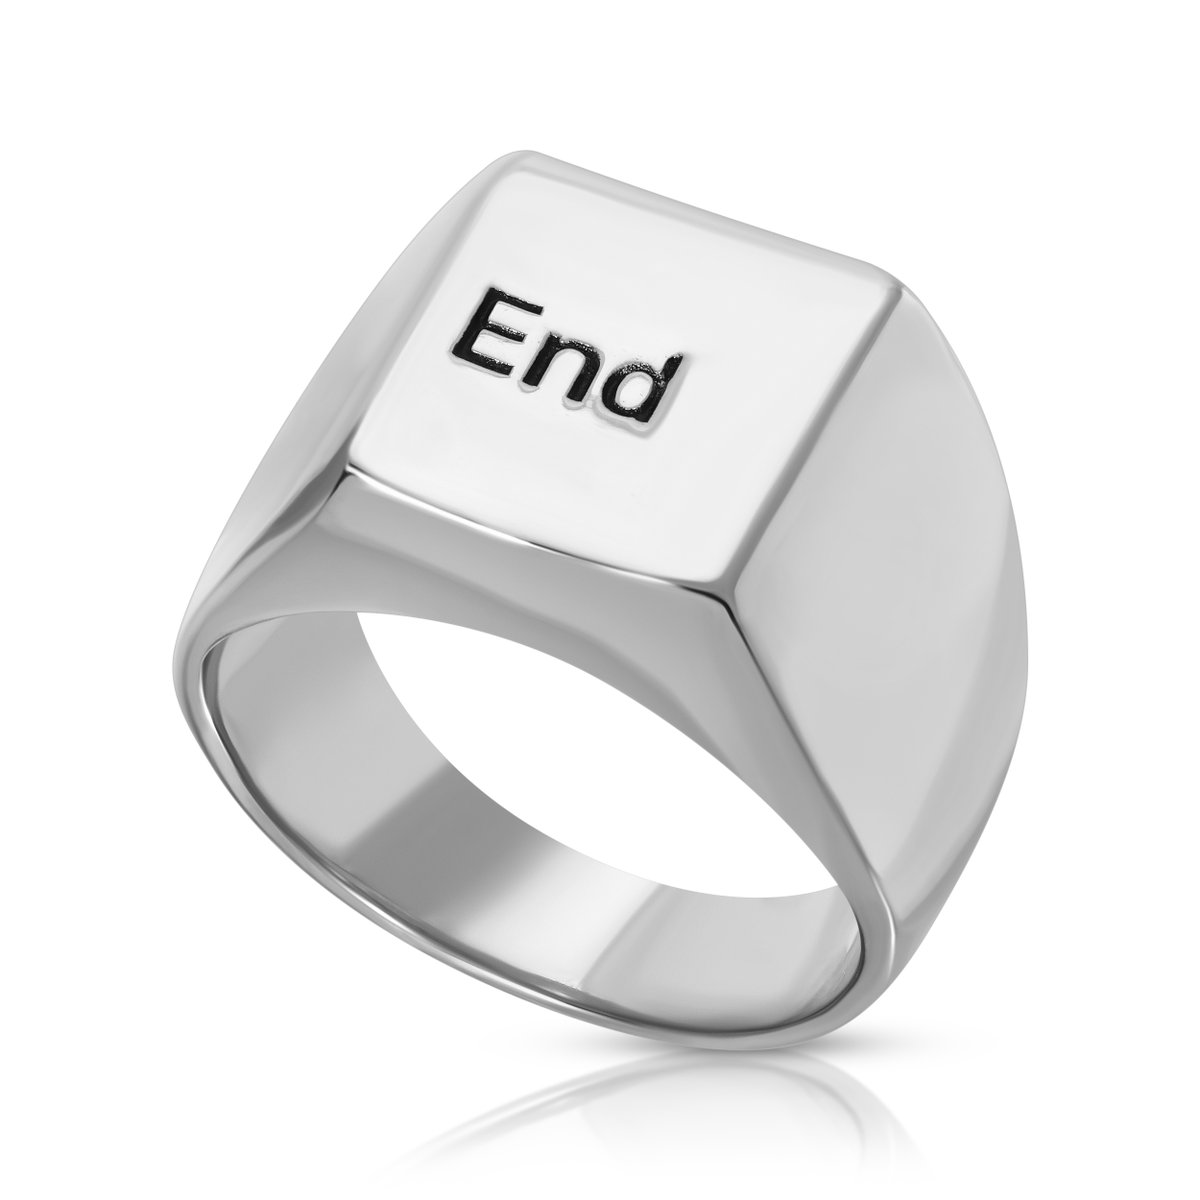 End - Computer Key Ring .925 Sterling Silver Black Enamel